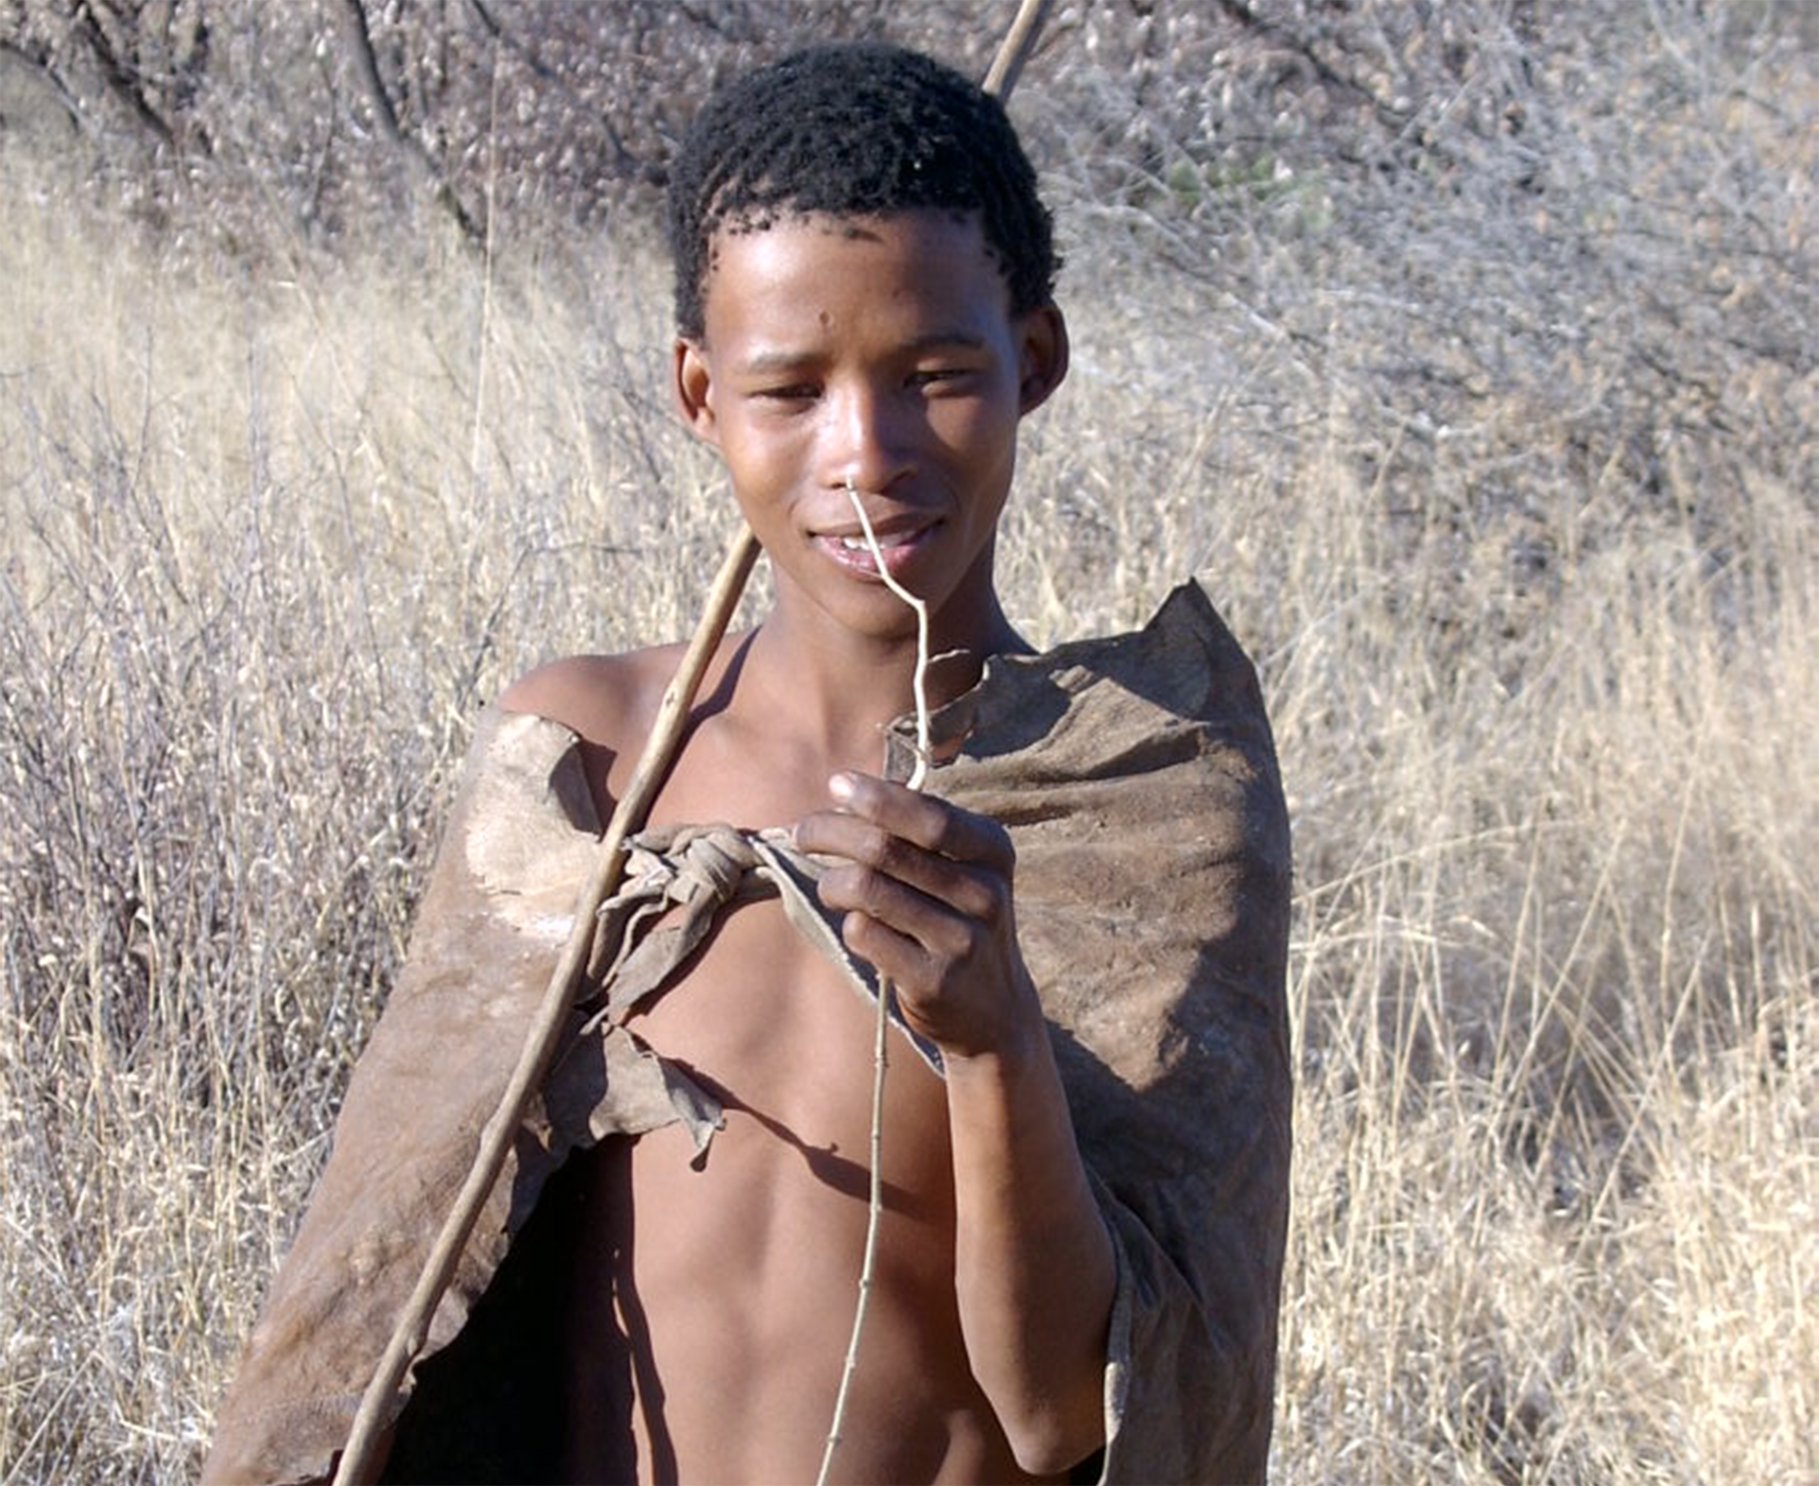 A young Bushman boy